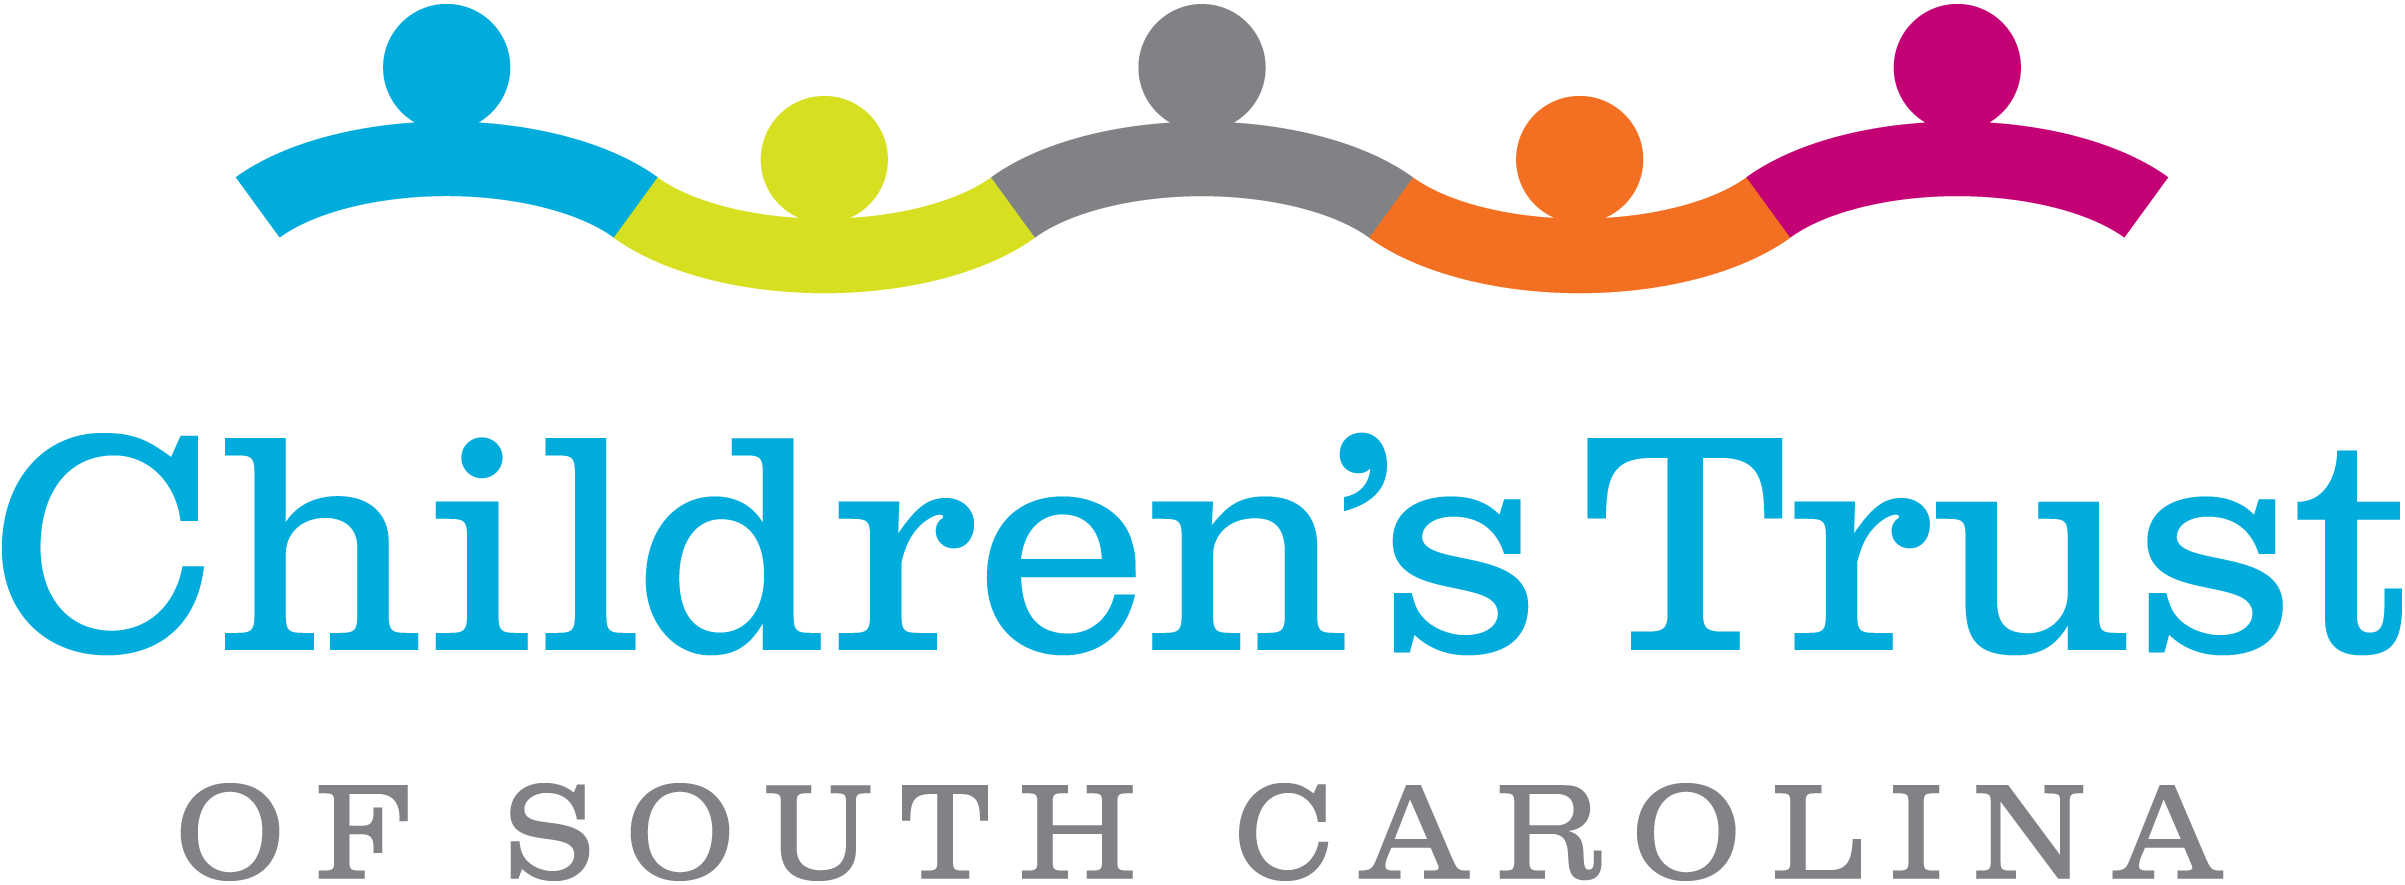 children's trust logo